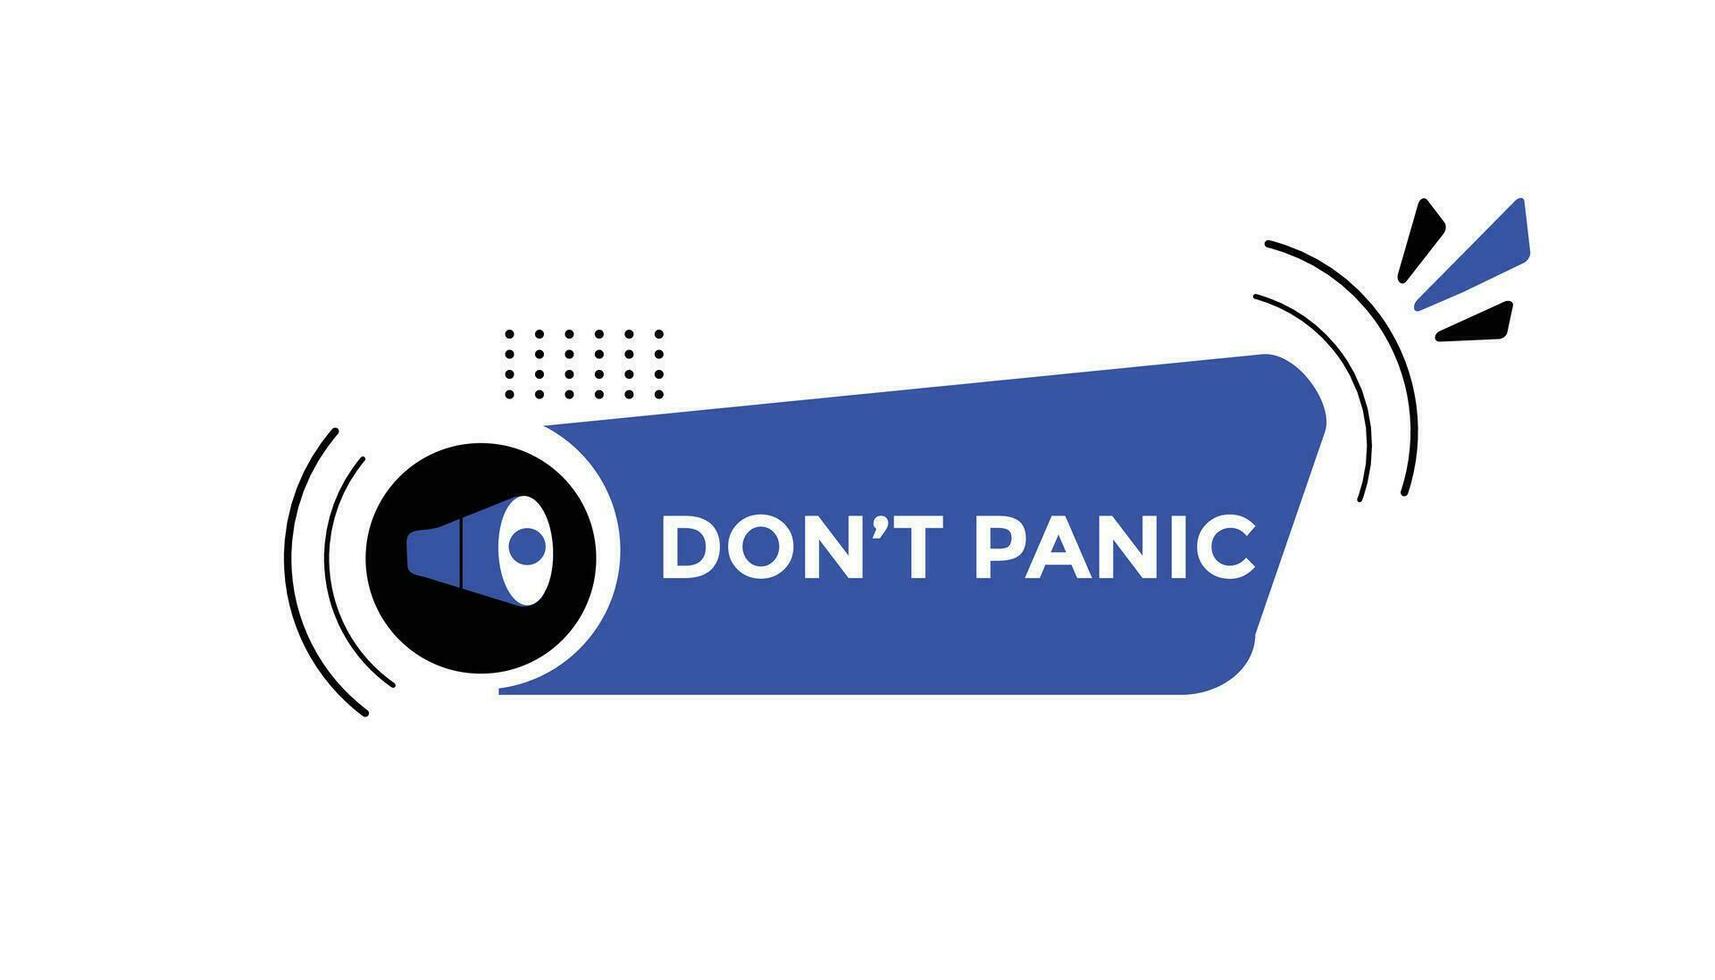 Don t panic button web banner templates. Vector Illustration